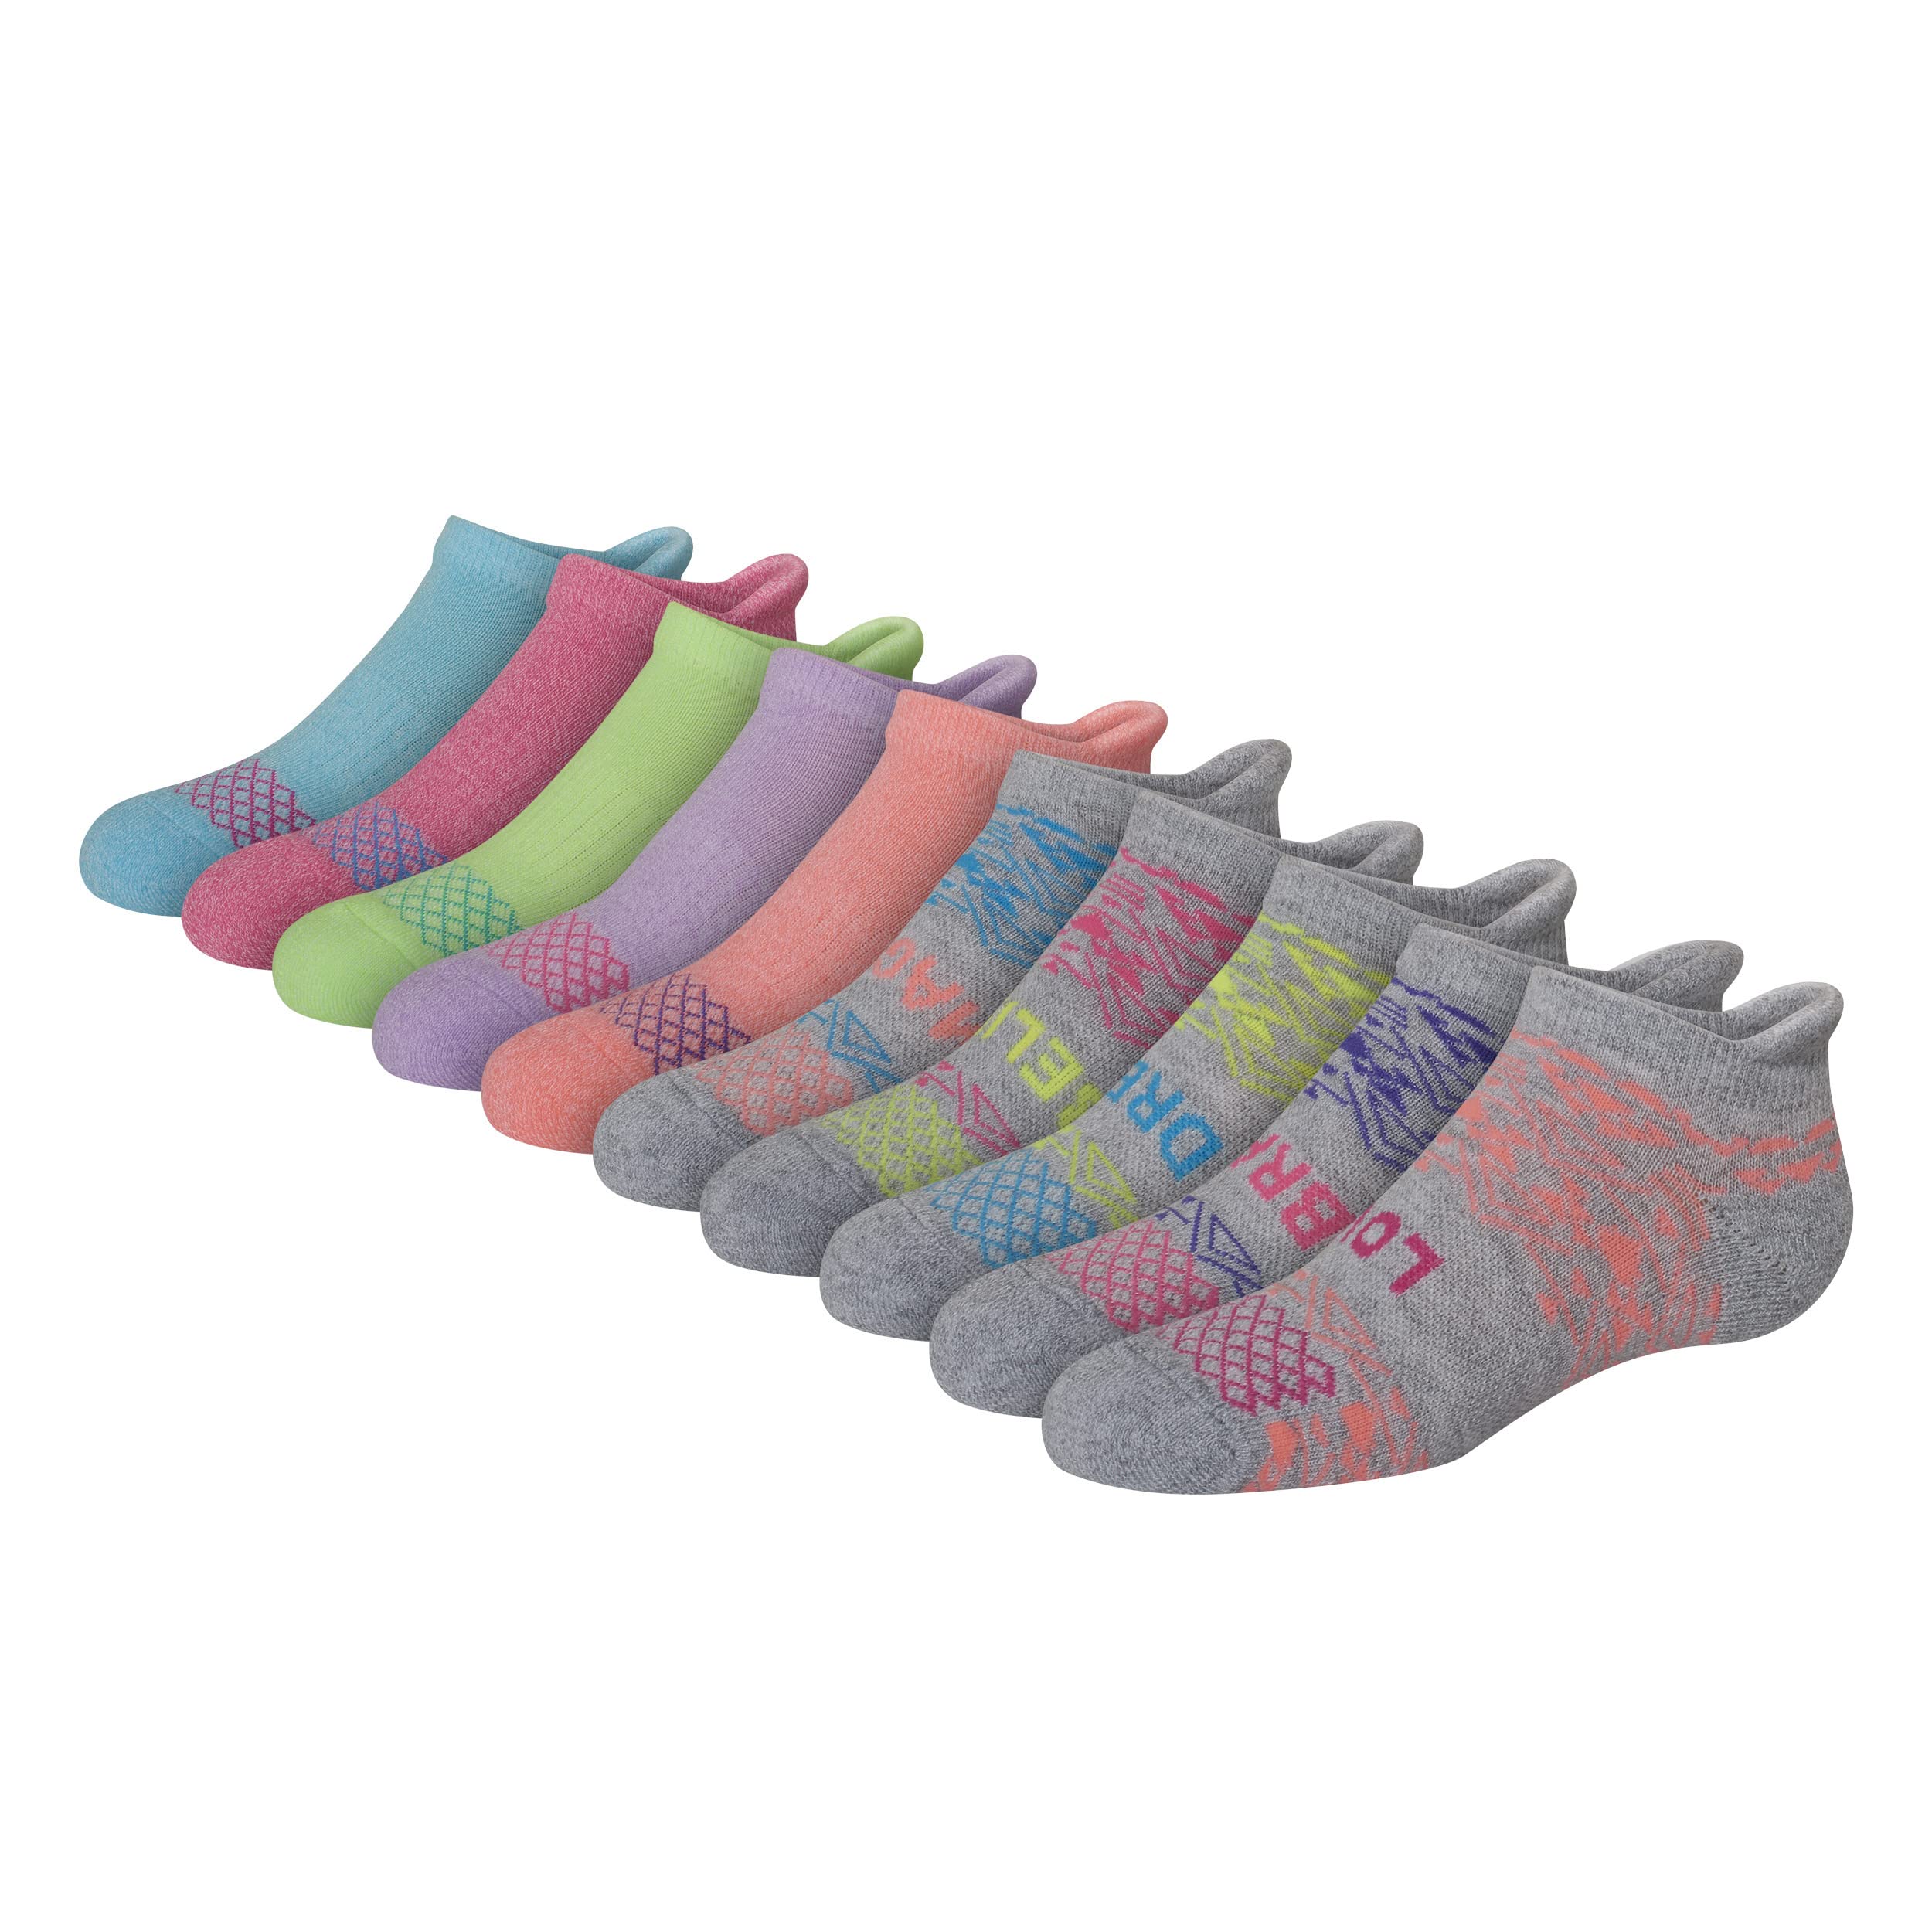 Hanes Girls' Comfort Fit Heel Shield and No Show Socks, 10-Pair Packs